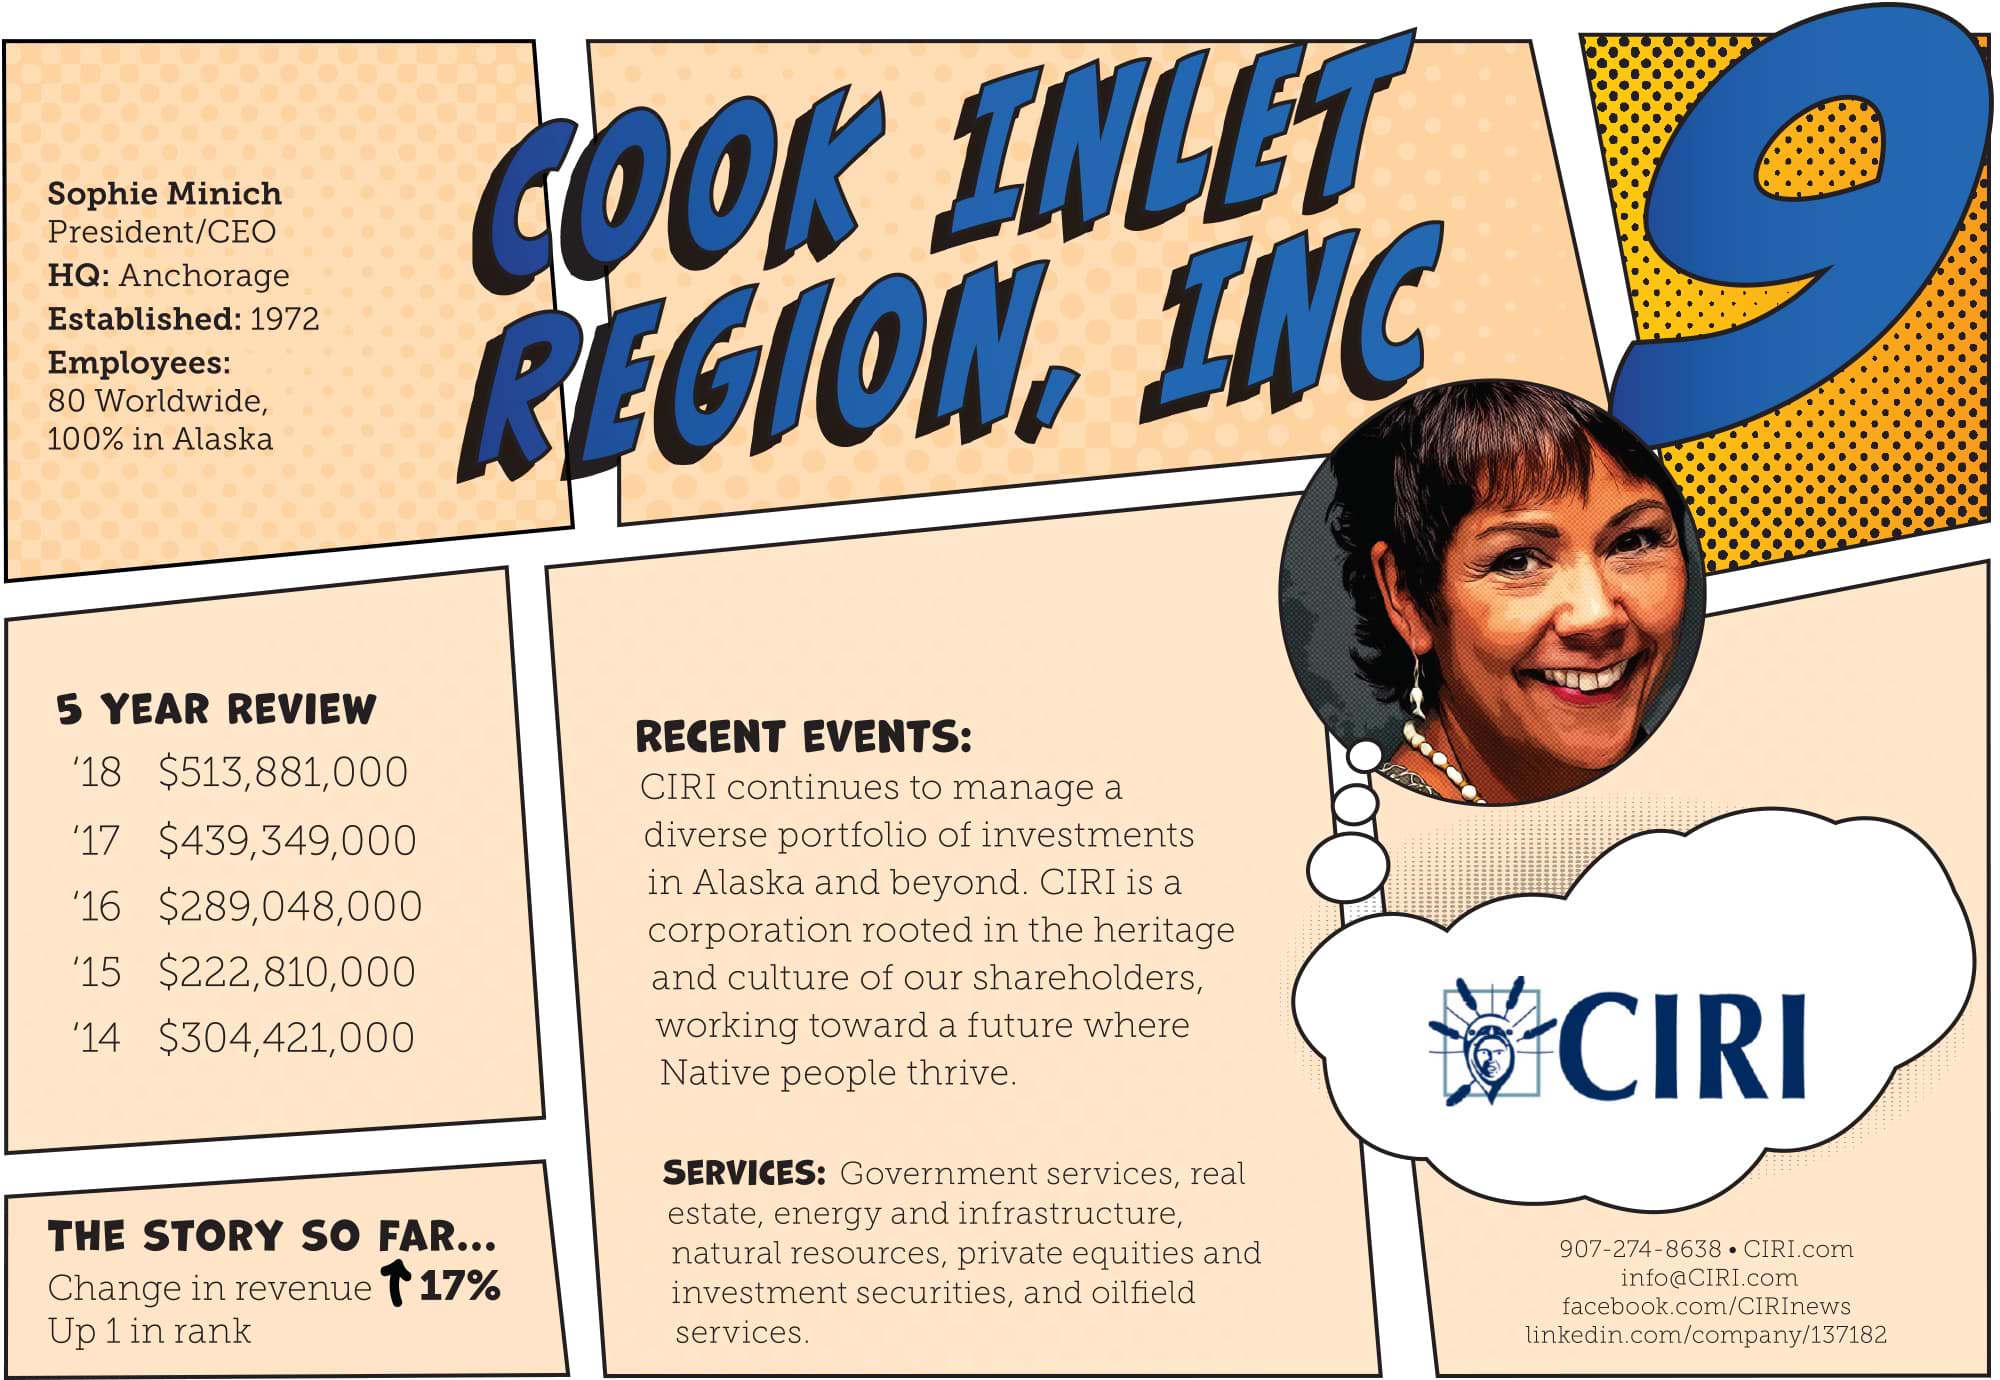 Cook Inlet Region, Inc